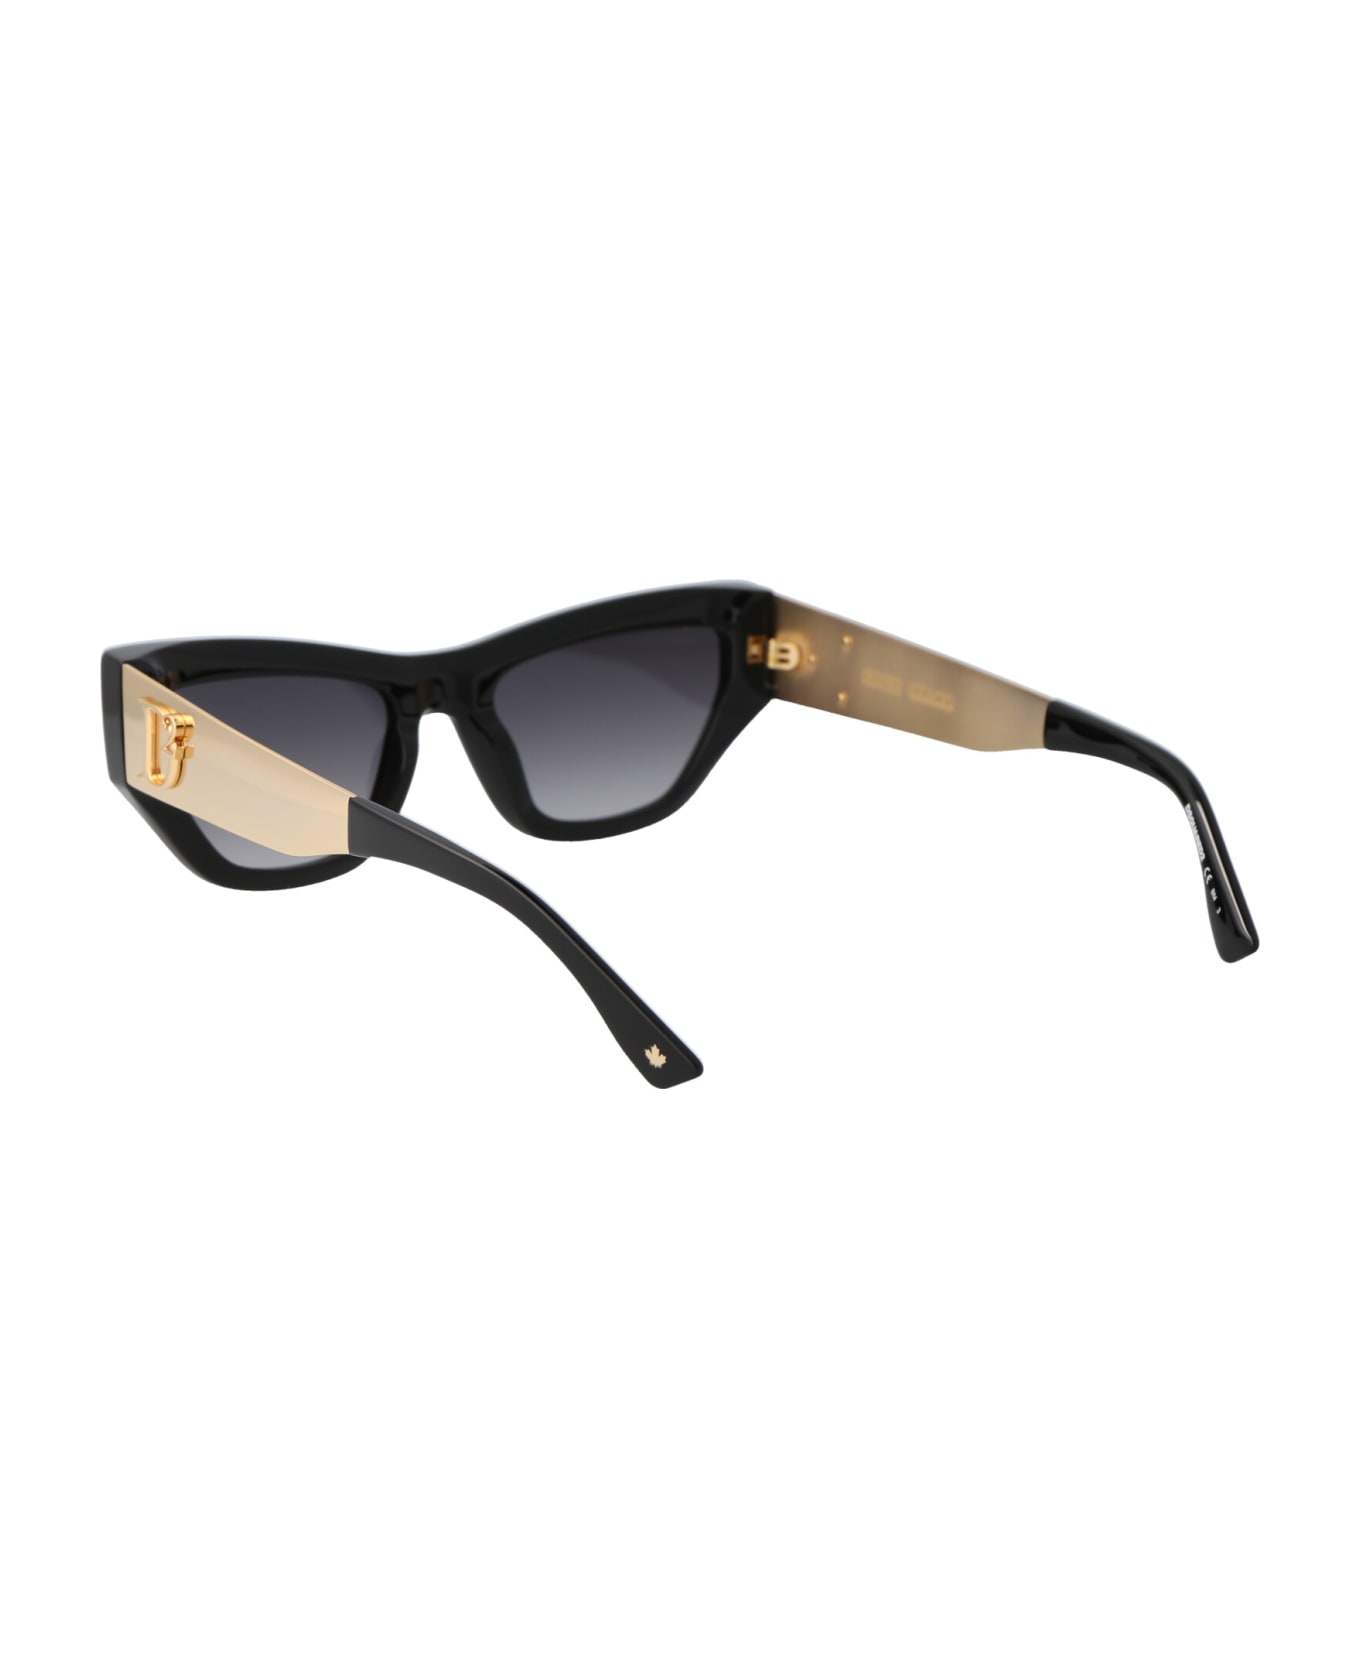 Dsquared2 Eyewear D2 0033/s Sunglasses - RHLFQ GOLD BLACK